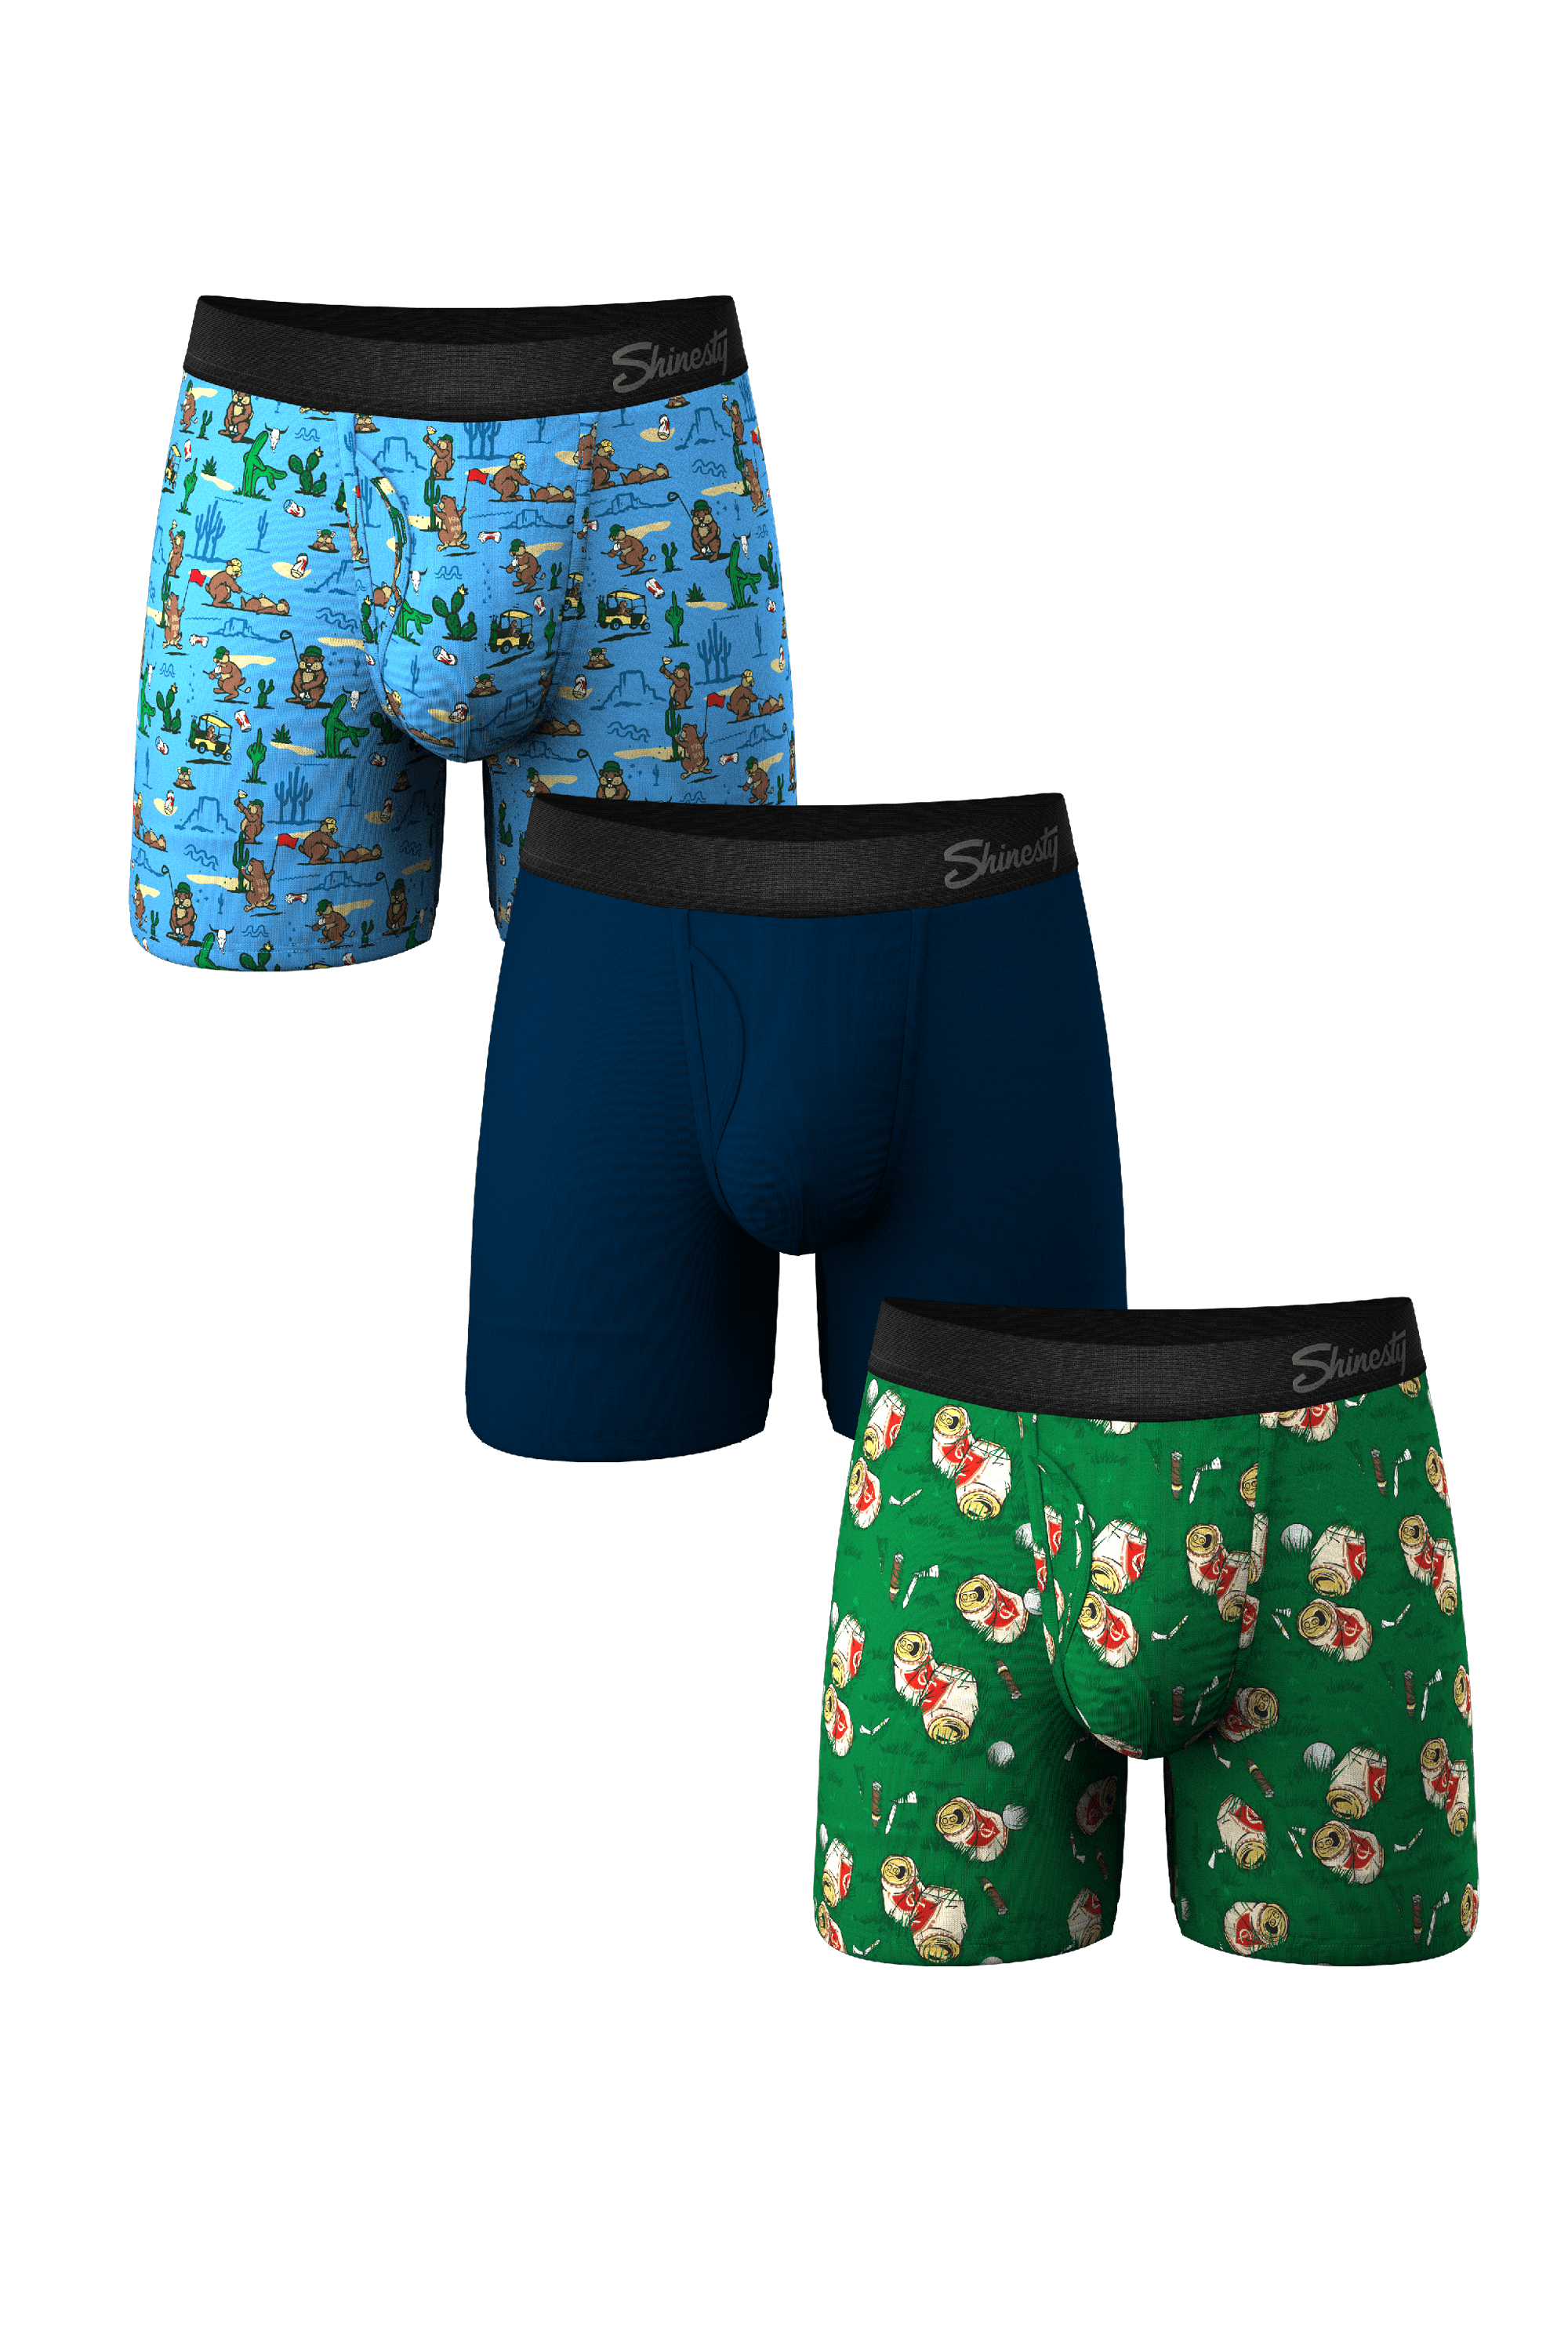 RICK AND MORTY - RICK VS MR. NIMBUS Boxer Brief - PSD Underwear